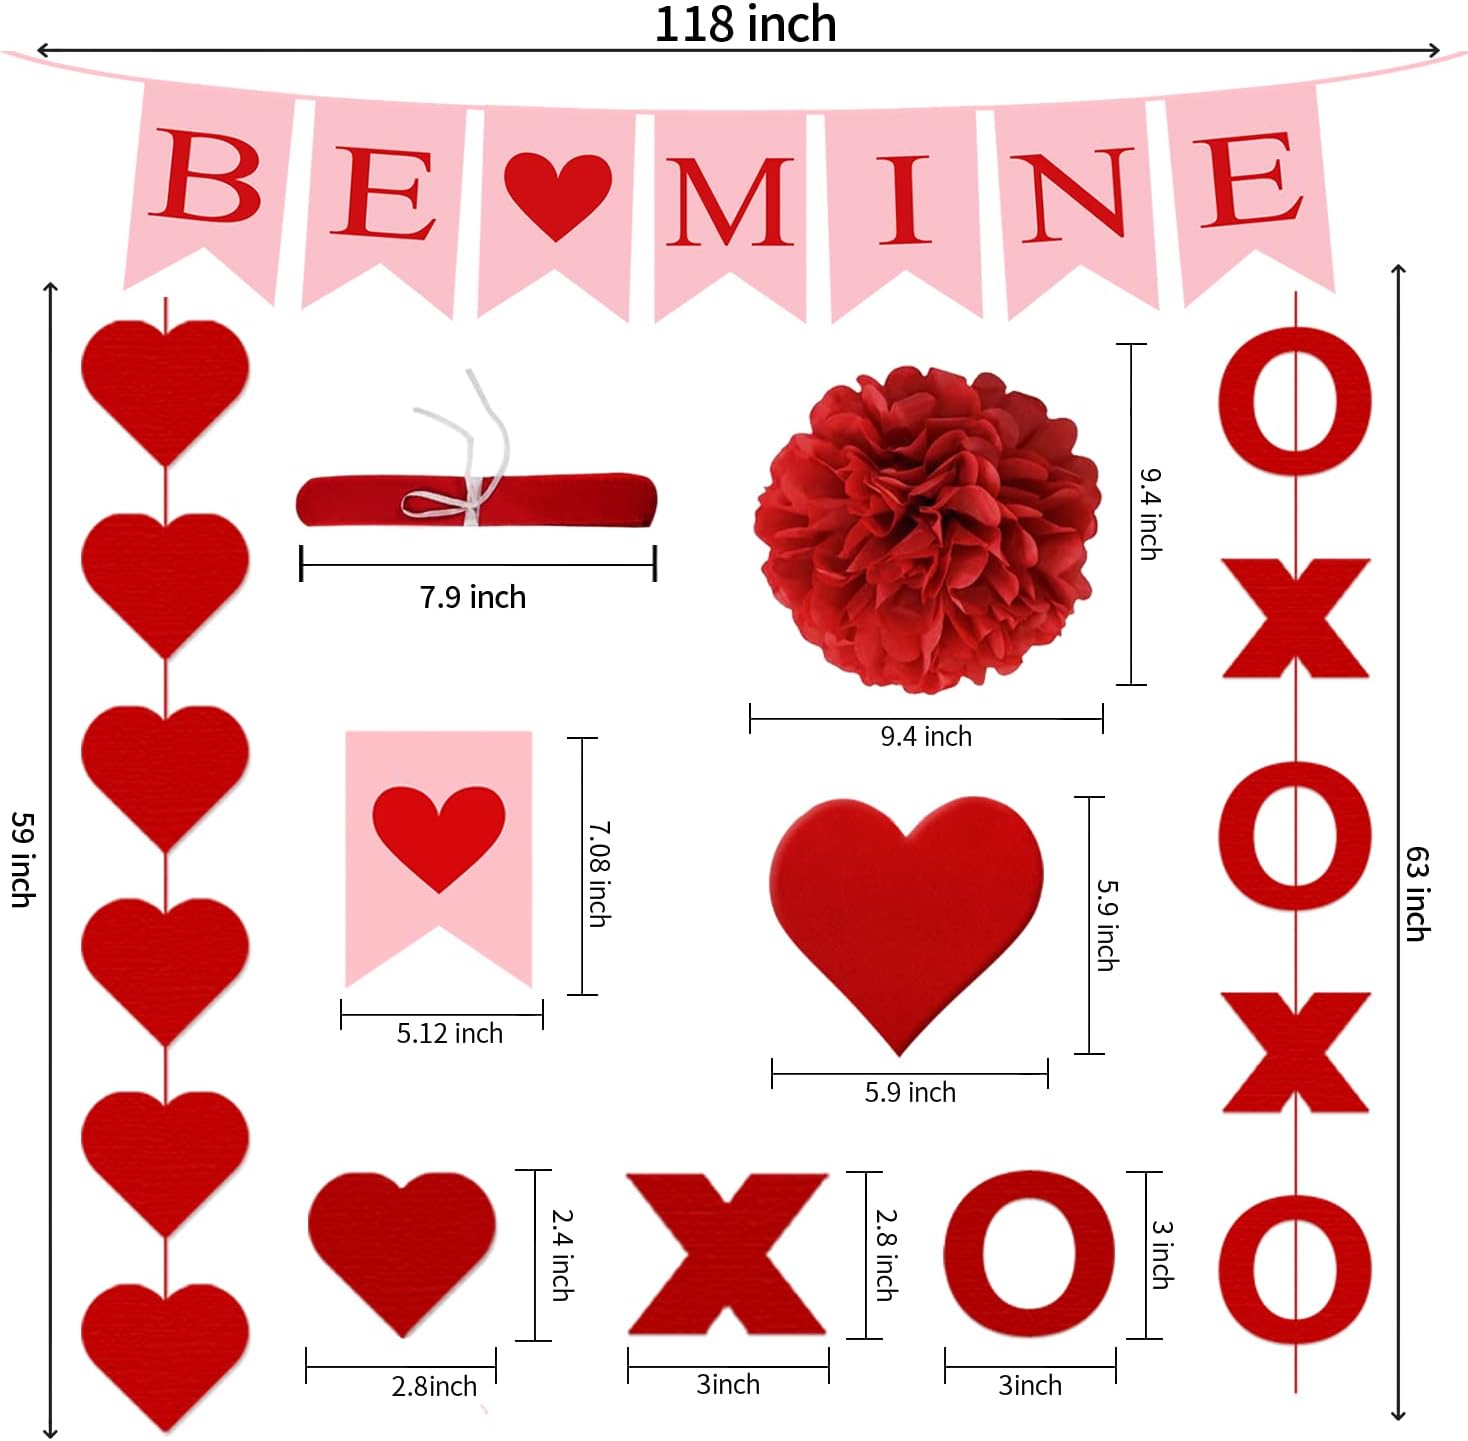 Valentines Day Decorations Set 21 Pieces, Hanging Heart Swirls BE Mine Love Heart XO Garlands Banner